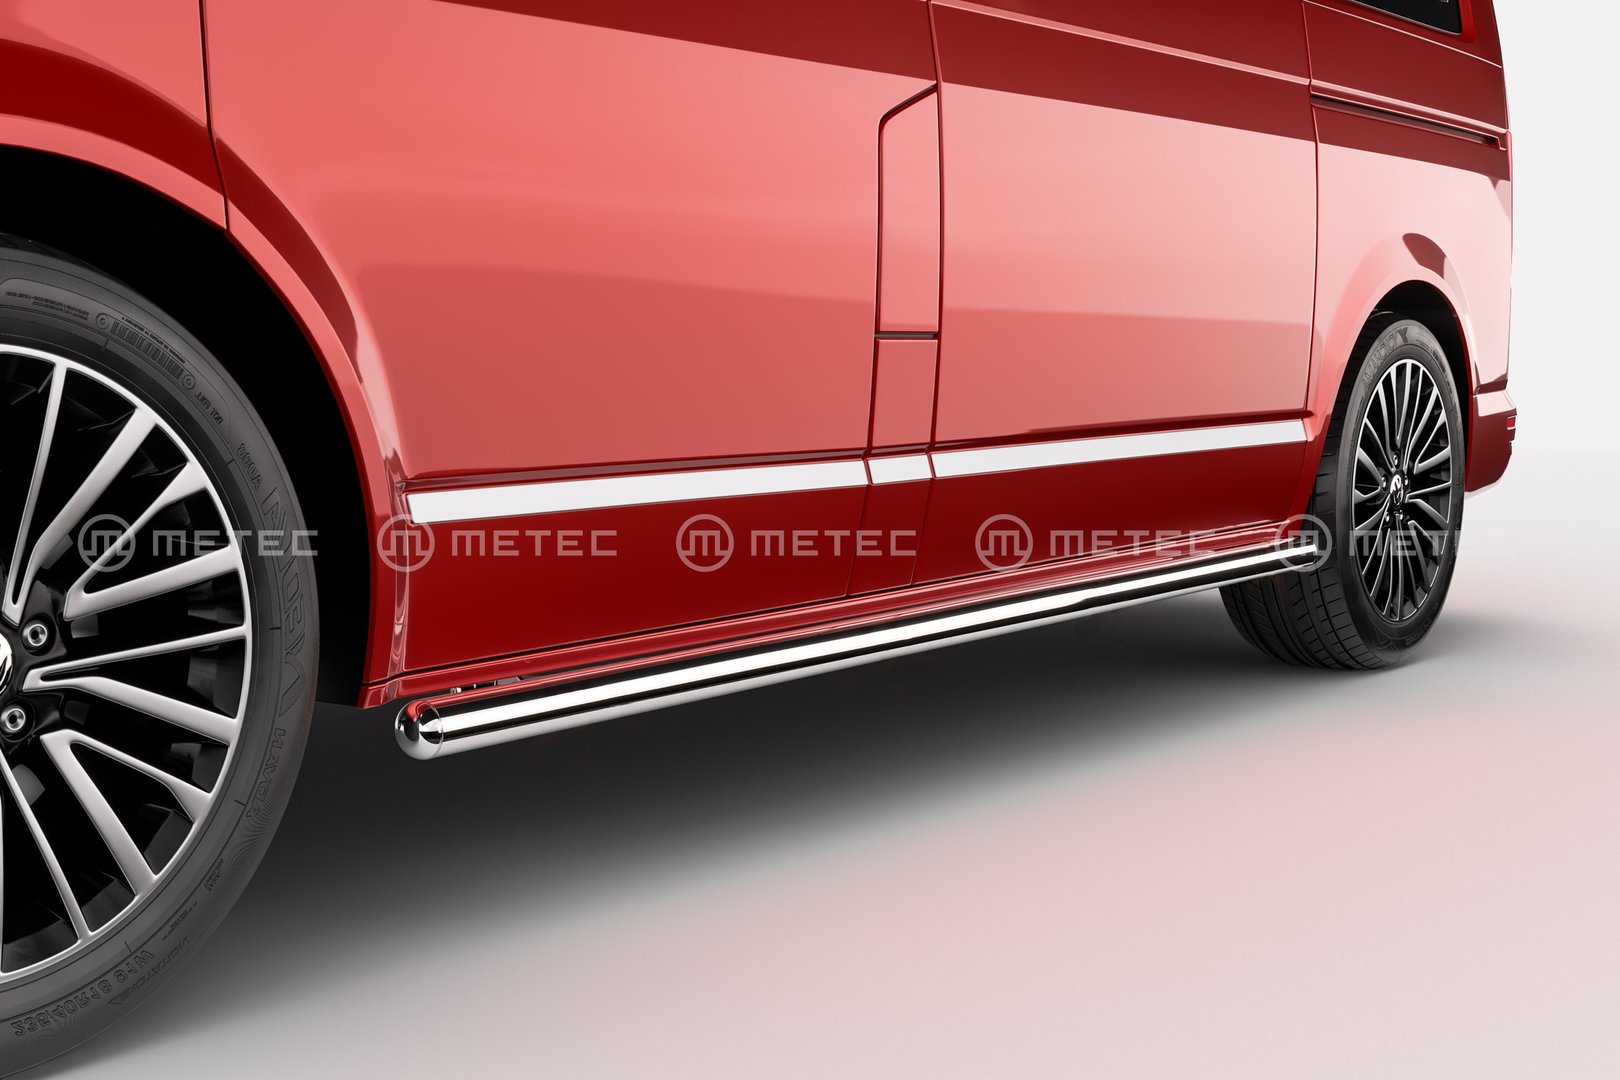 VW Transporter T5 and T5 GP Side bars S-liner (Metec)